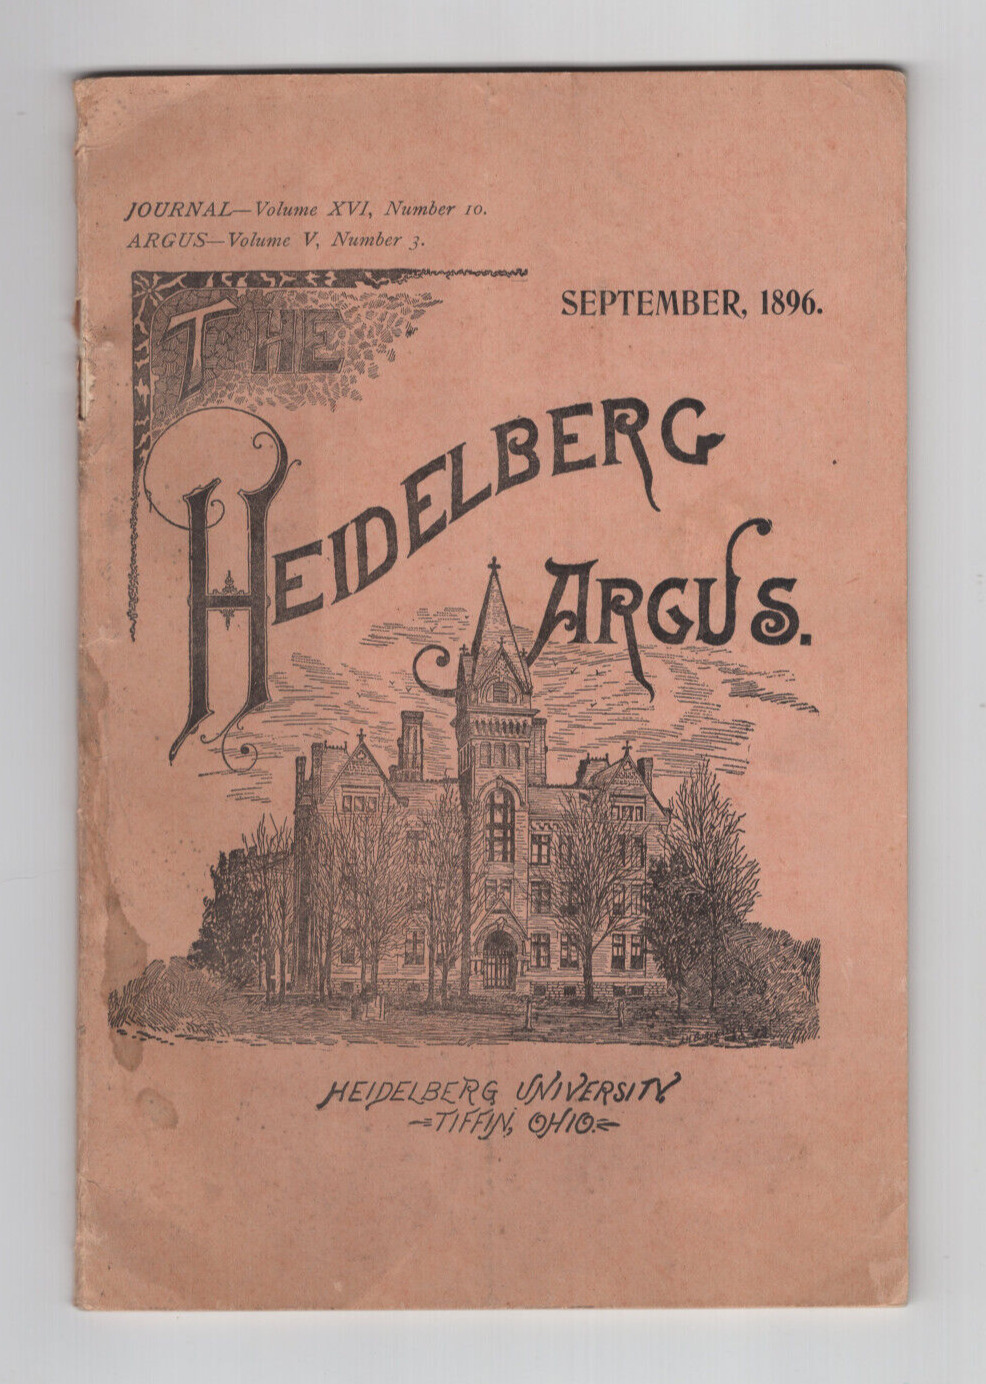 RARE 1896 HEIDELBERG Argus UNIVERSITY Journal Tiffin Ohio Church of Christ Ads